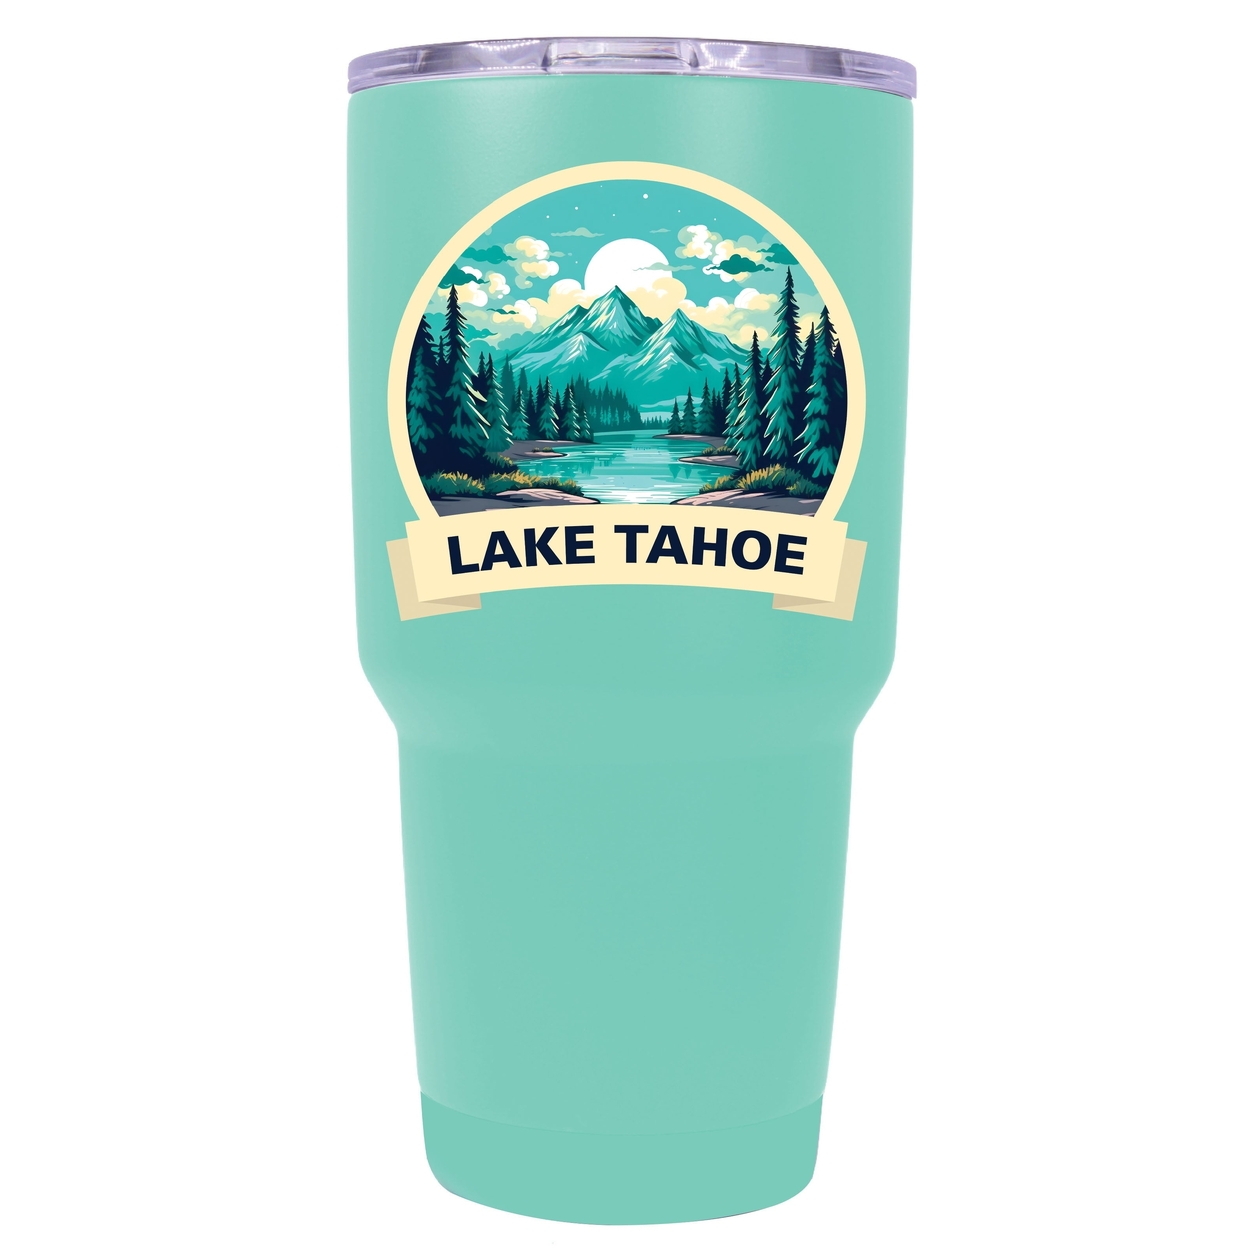 Lake Tahoe California Souvenir 24 Oz Insulated Stainless Steel Tumbler - Seafoam,,4-Pack